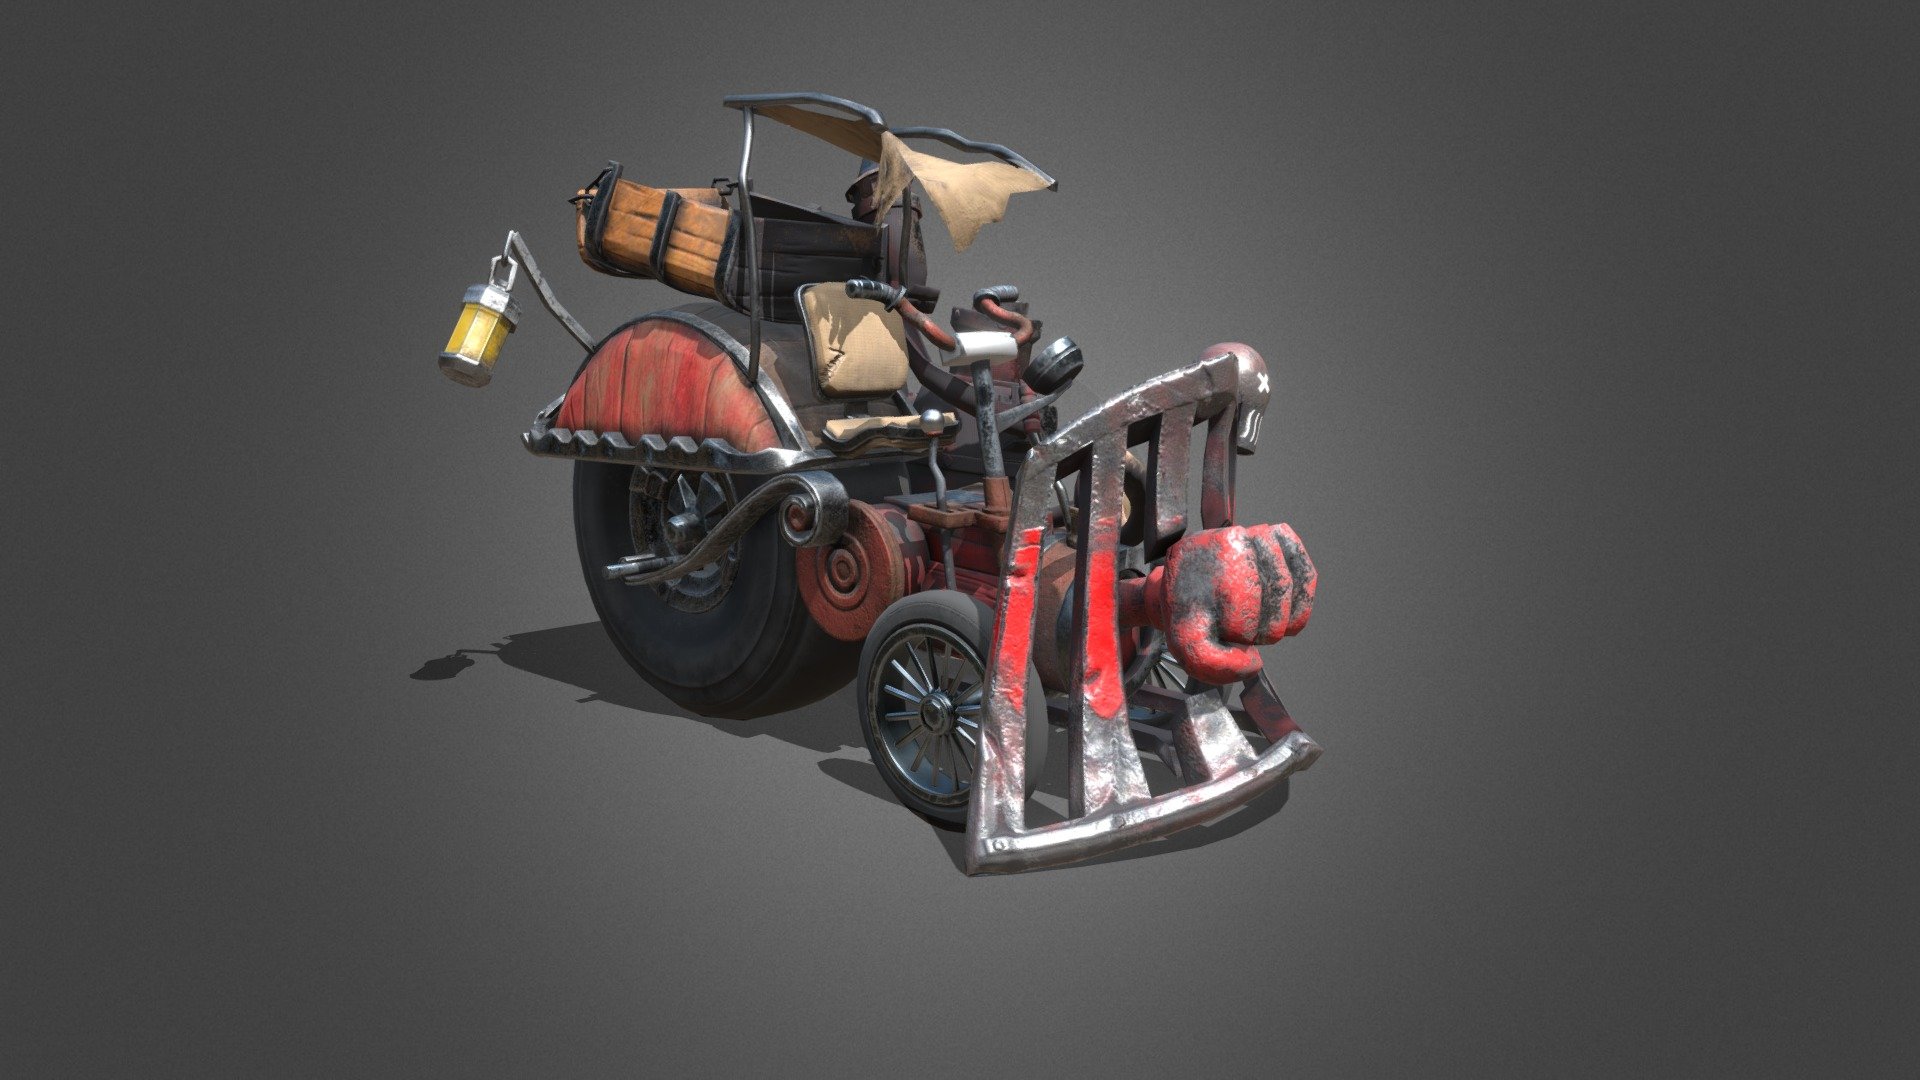 The destructive crazy vehicle powered by steam!! Puf Puf!!
TIMELAPSE FROM MY WORK &mdash;&gt; &mdash;&gt; https://youtu.be/cUn1rL1CoB4 - Steam Vagon - 3D model by Igor Zukowicz (@gonzobmx) 3d model